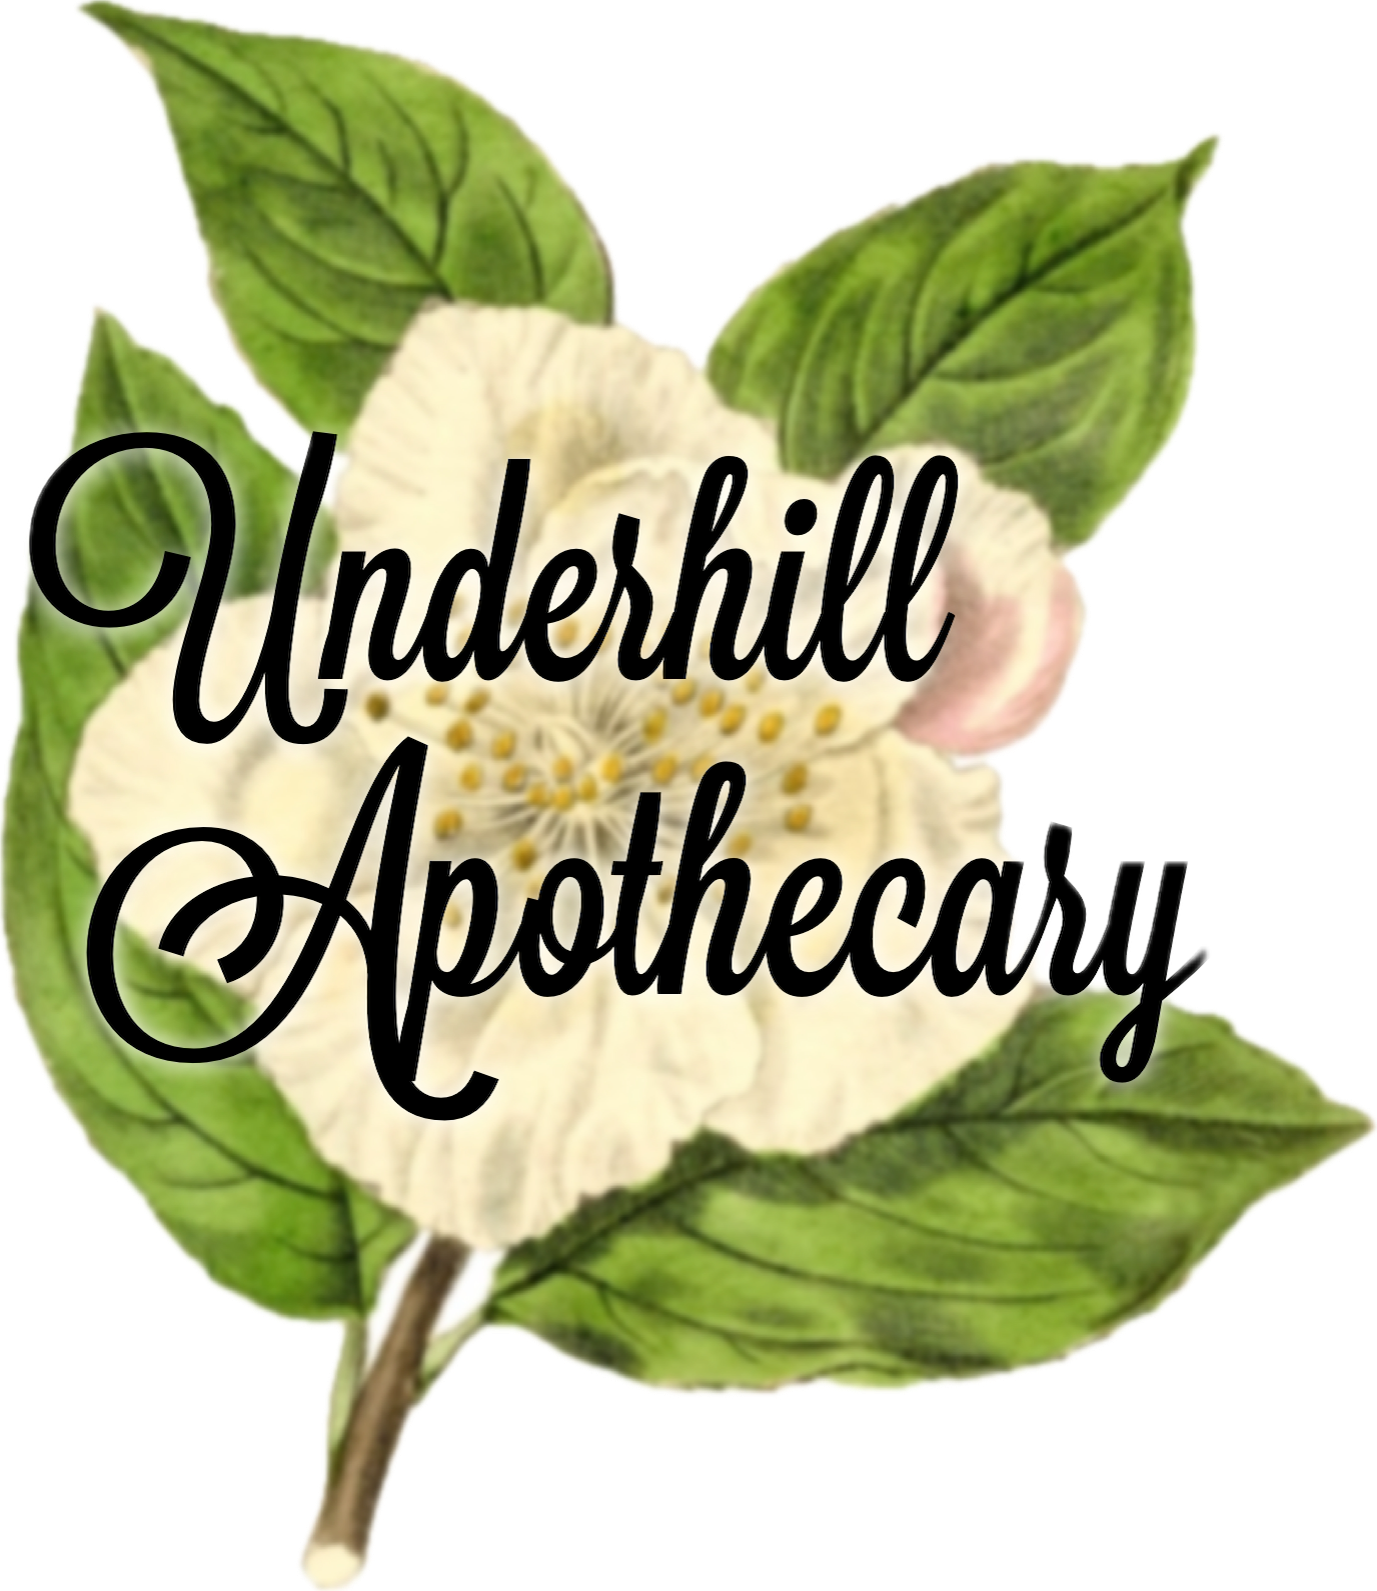 Underhill Apothecary